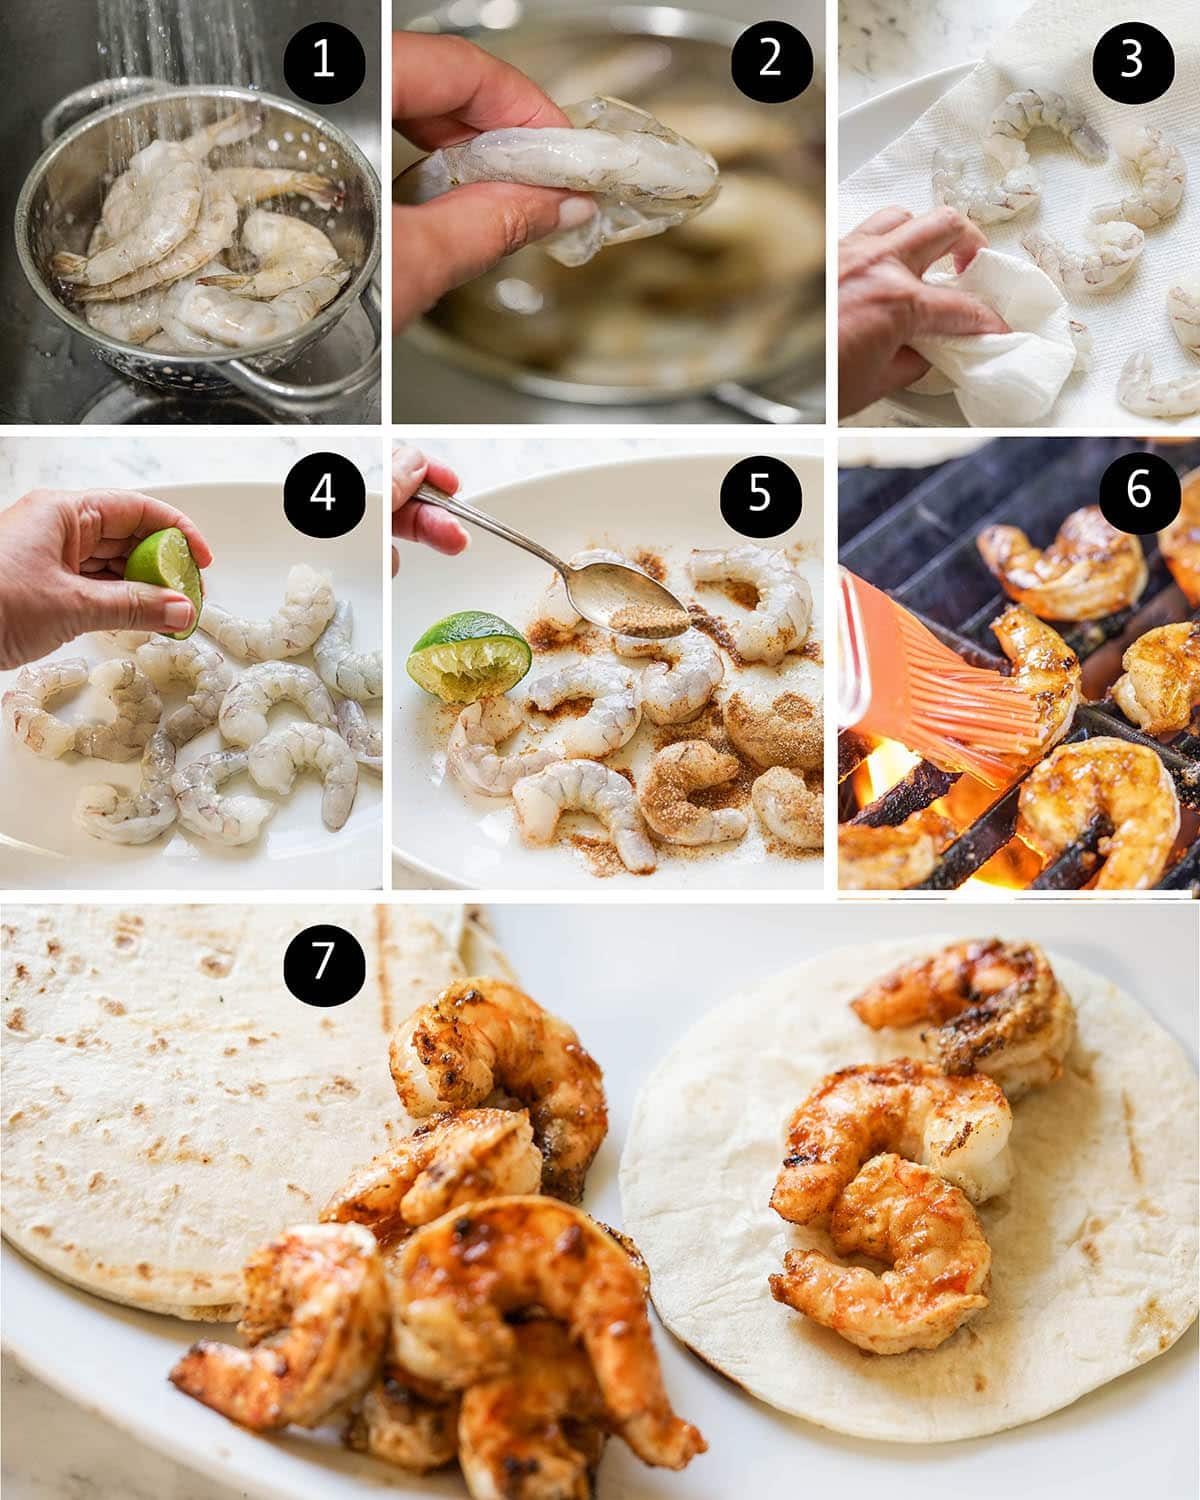 Steps by step instruction to make shrimp tacos